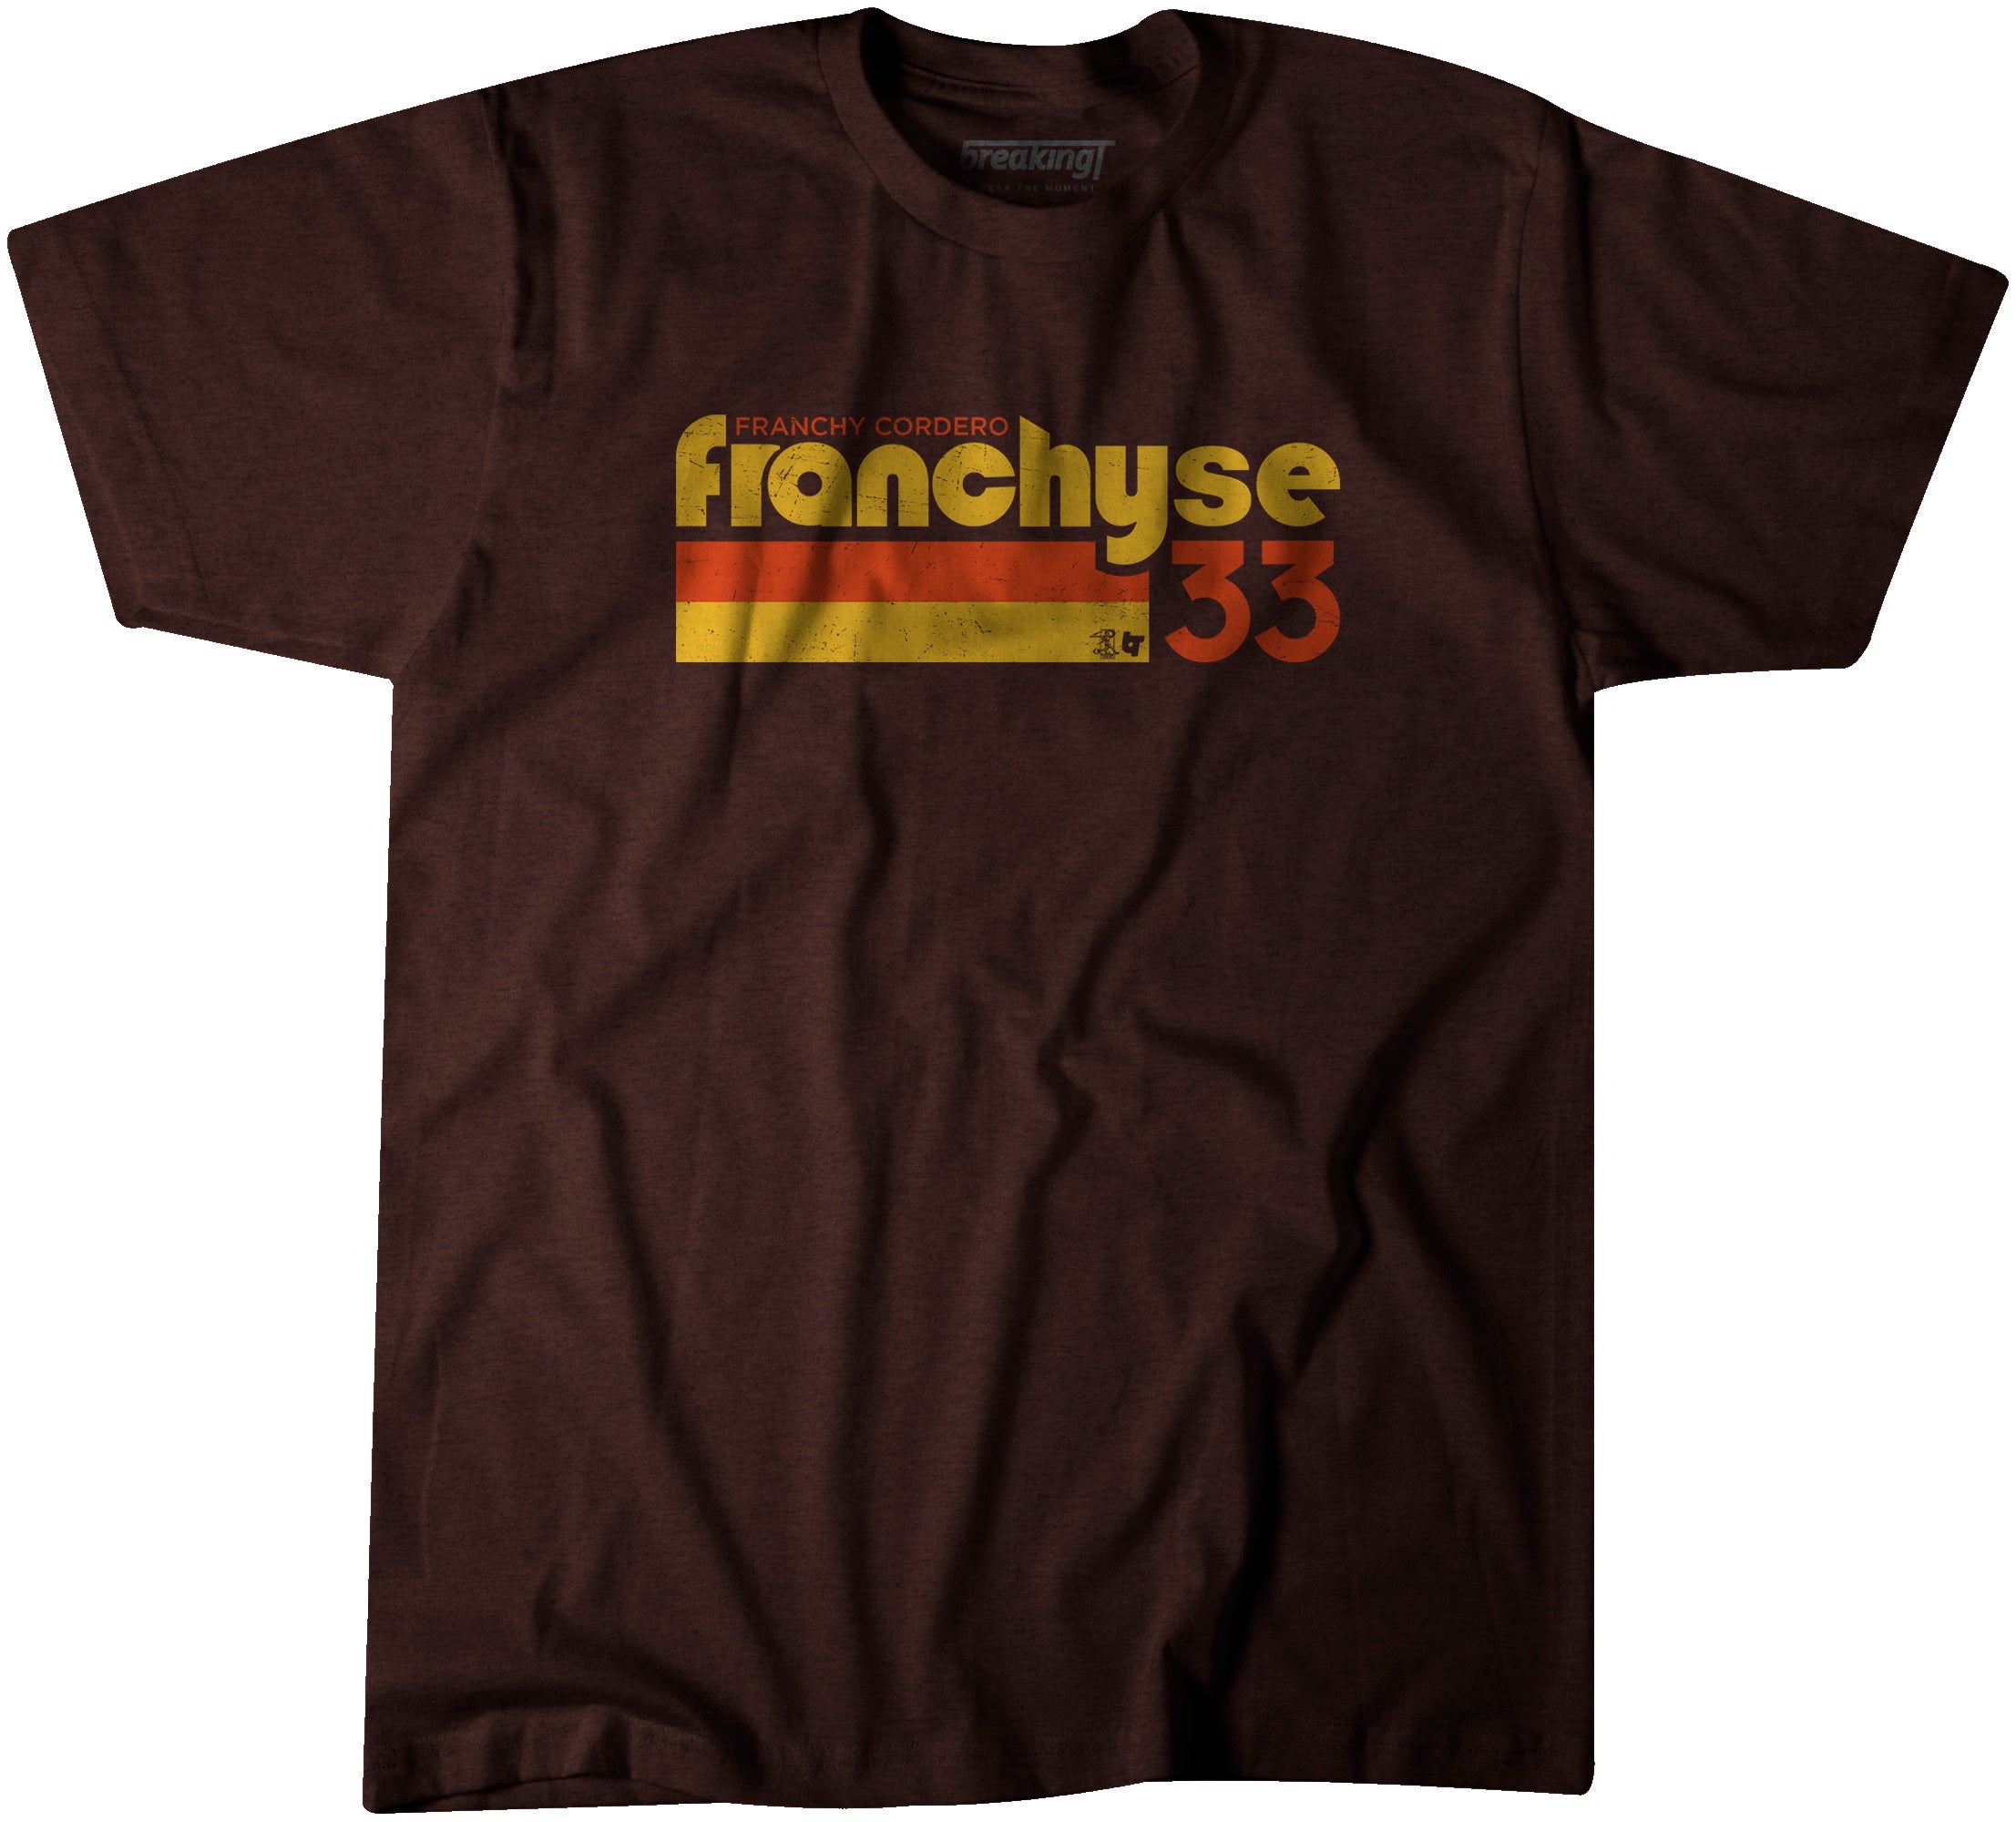 Franchy Cordero Shirt, The Franchyse - BreakingT